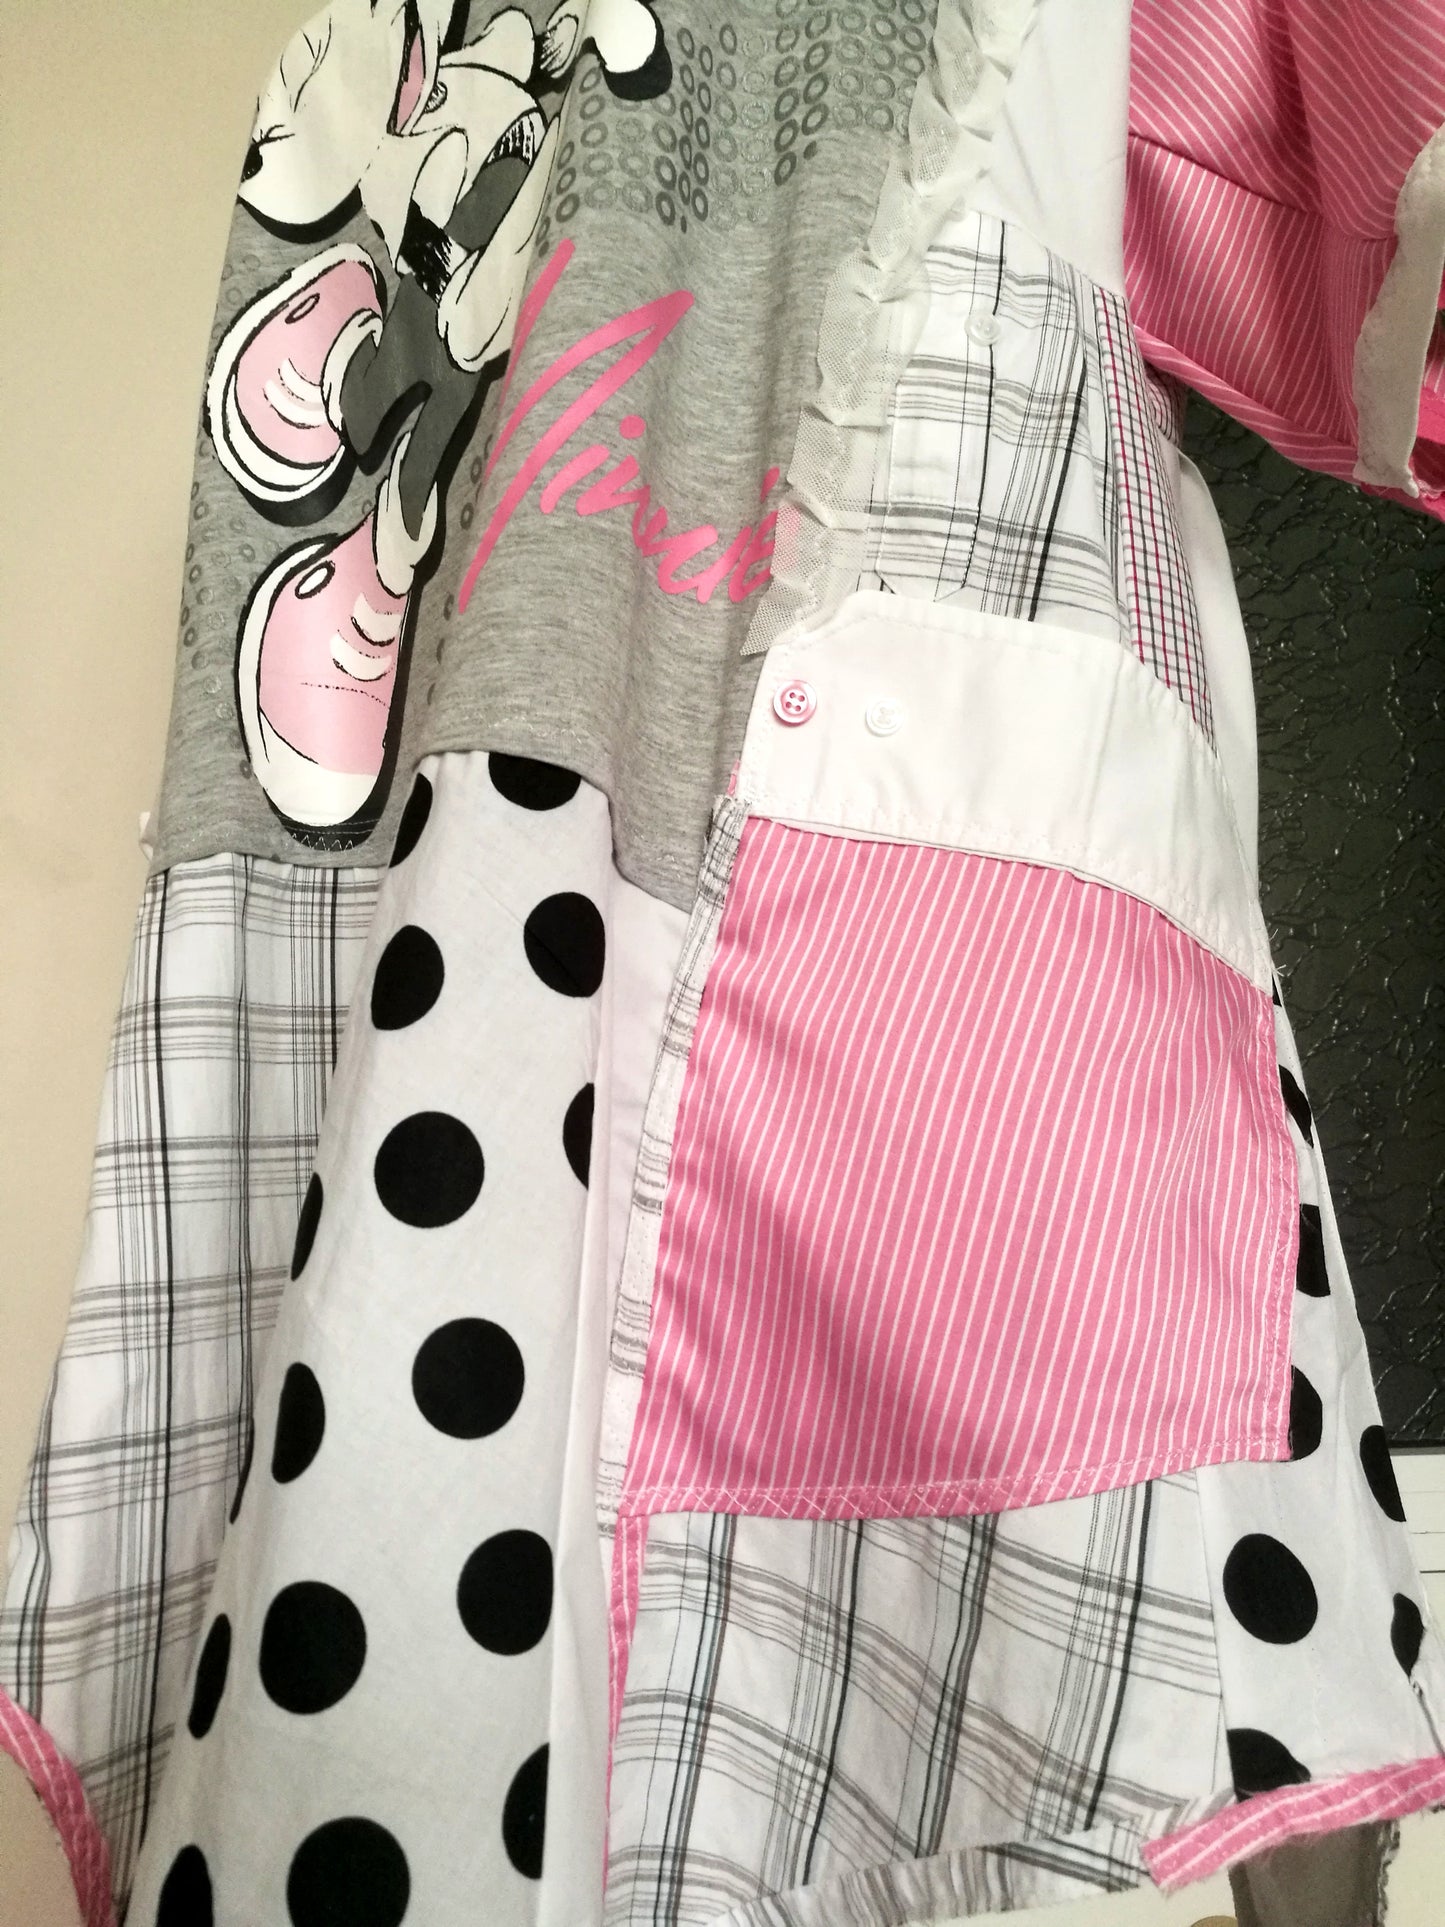 Plus Size Minnie Mouse Dress 3XL Boho Pink Shirt Dress For Women